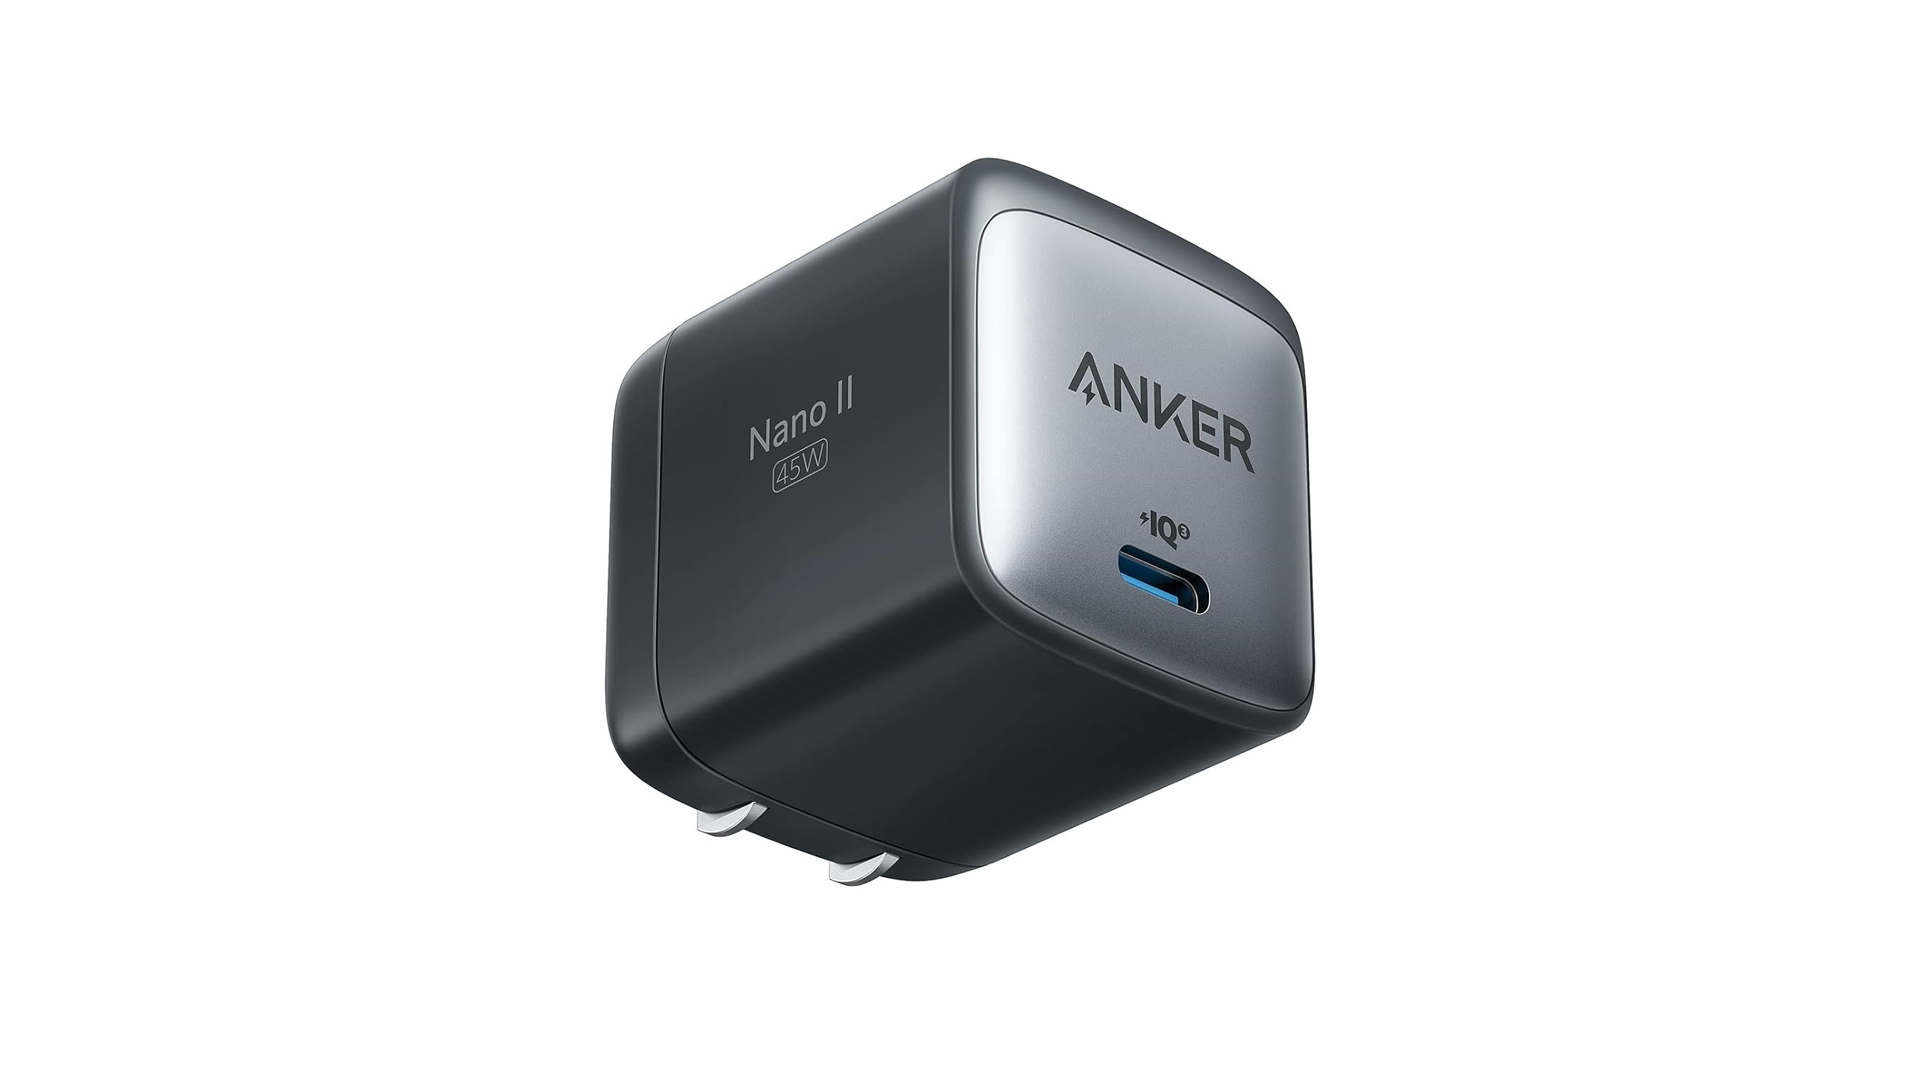 The Anker 713 Nano II wall charger